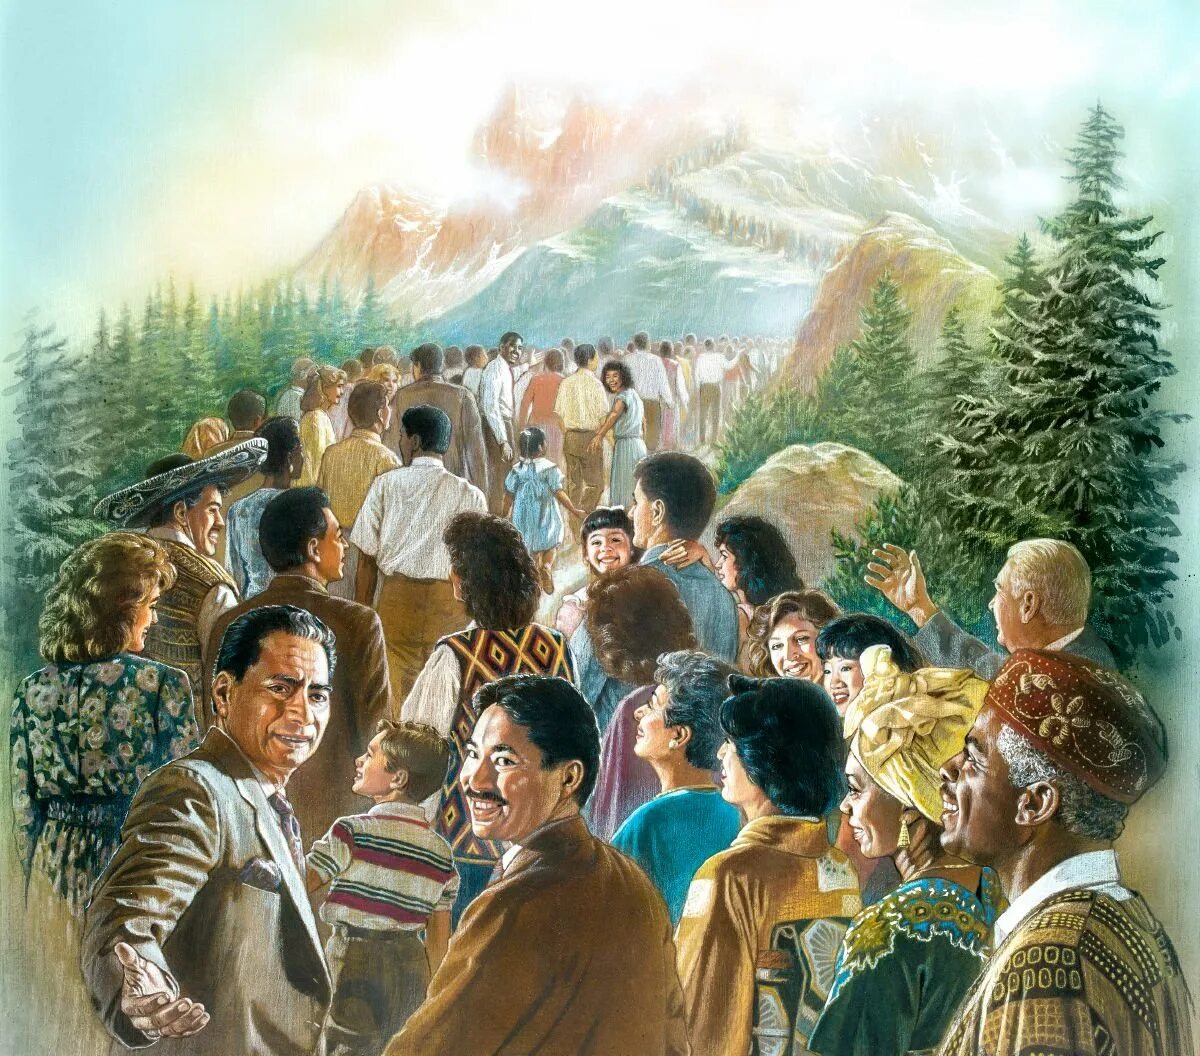 Сторожевая башня свидетели Иеговы рай. Свидетели Иеговы JW. Иллюстрации свидетелей Иеговы рай. Иллюстрации свидетелей Иеговы царство Бога.